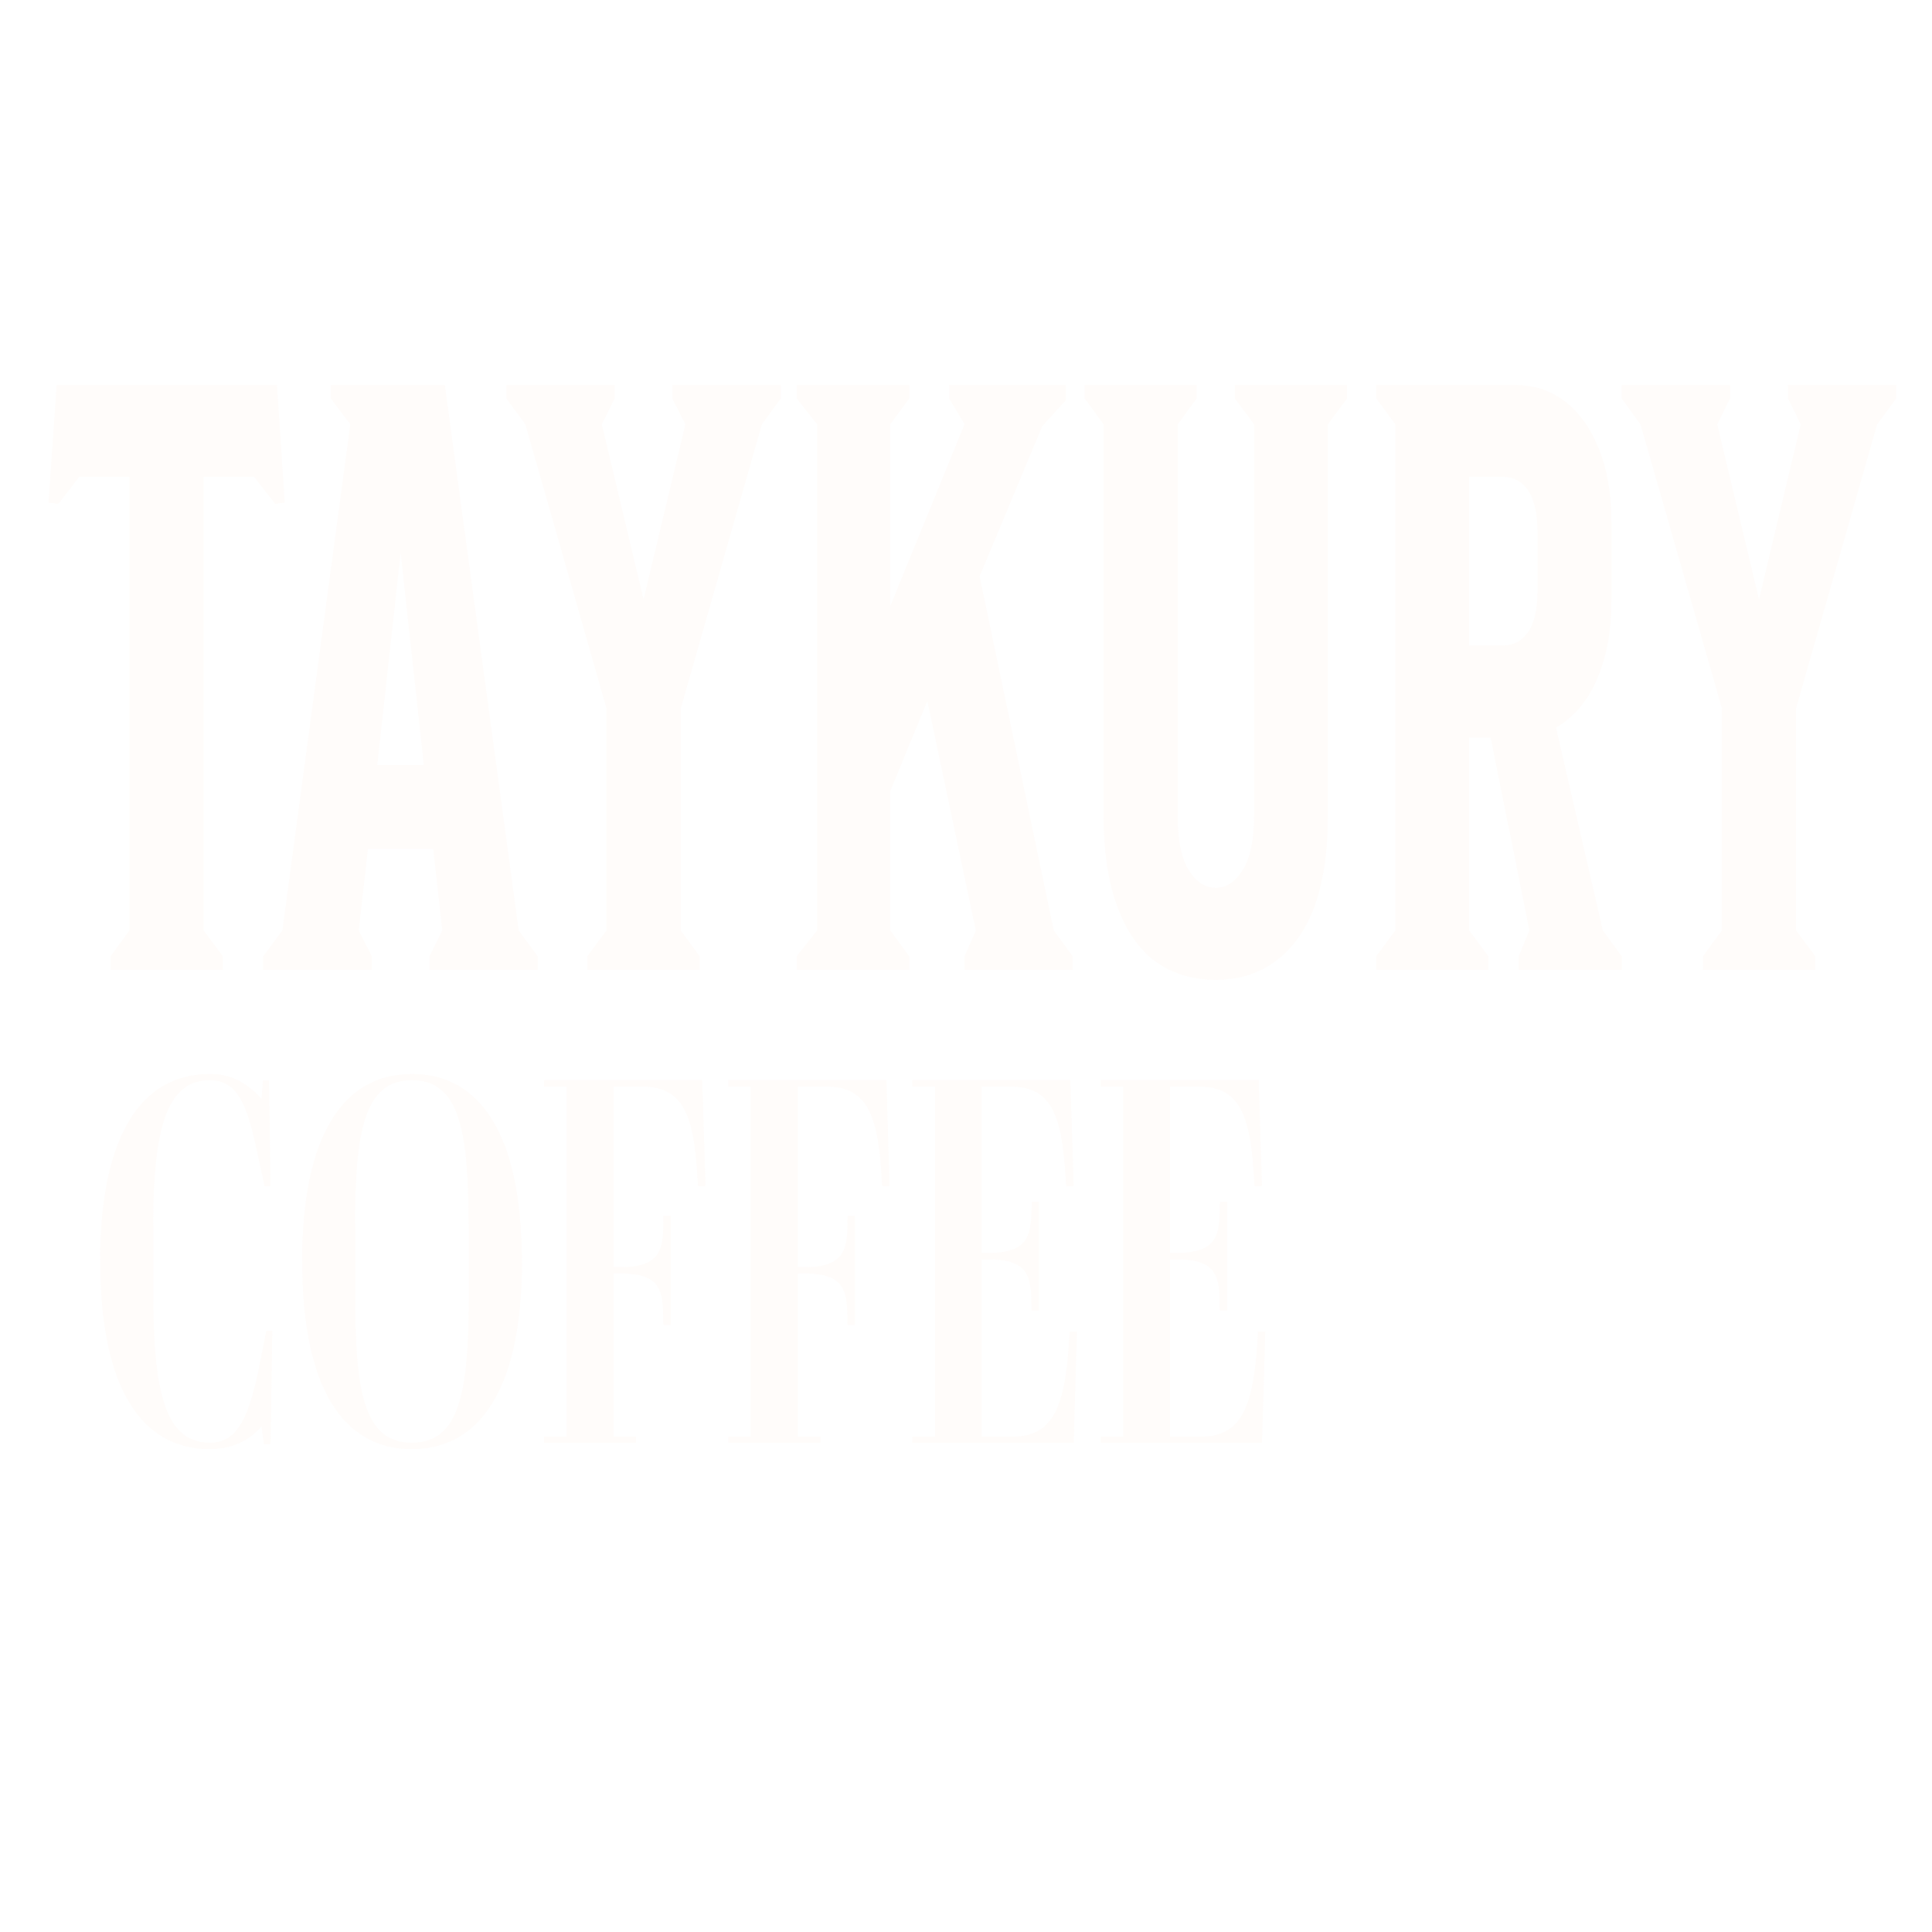 TAYKURY COFFEE